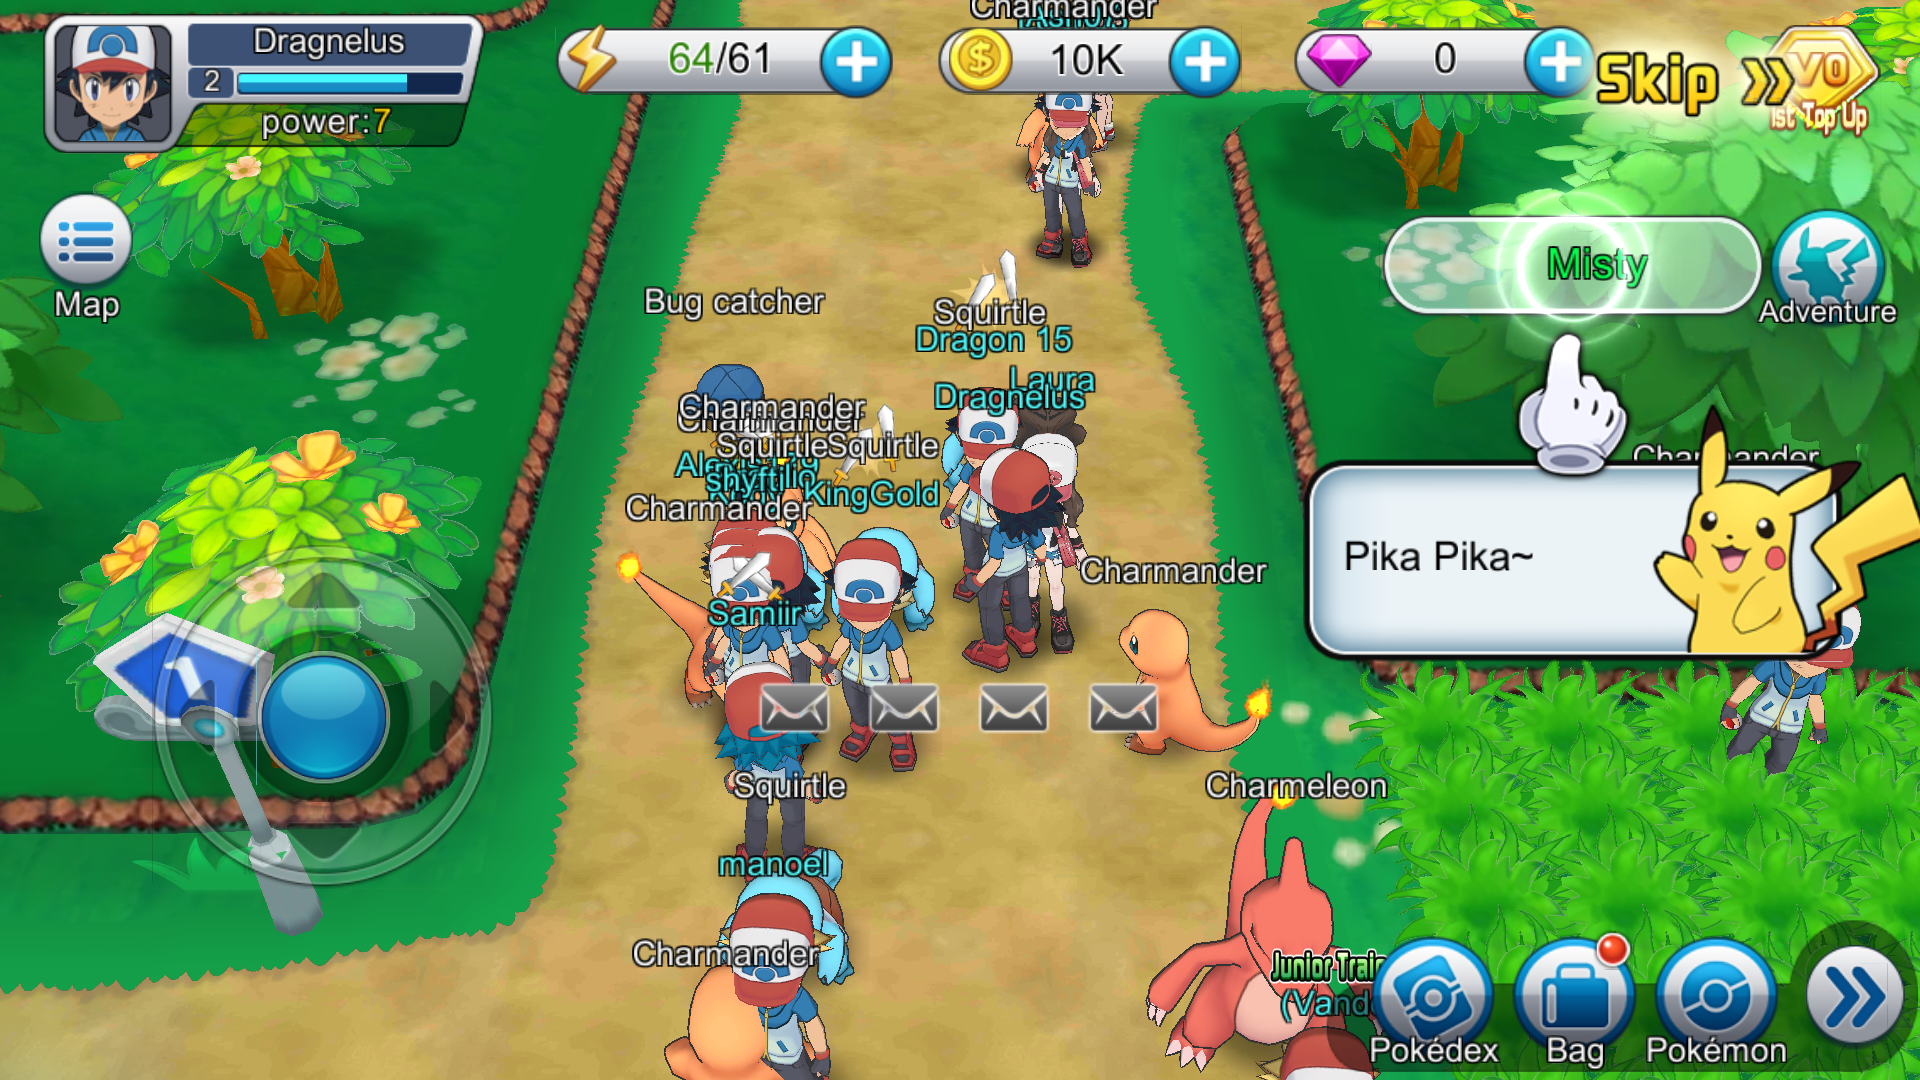 New Pokemon mmorpg on mobile! — MMORPG.com Forums